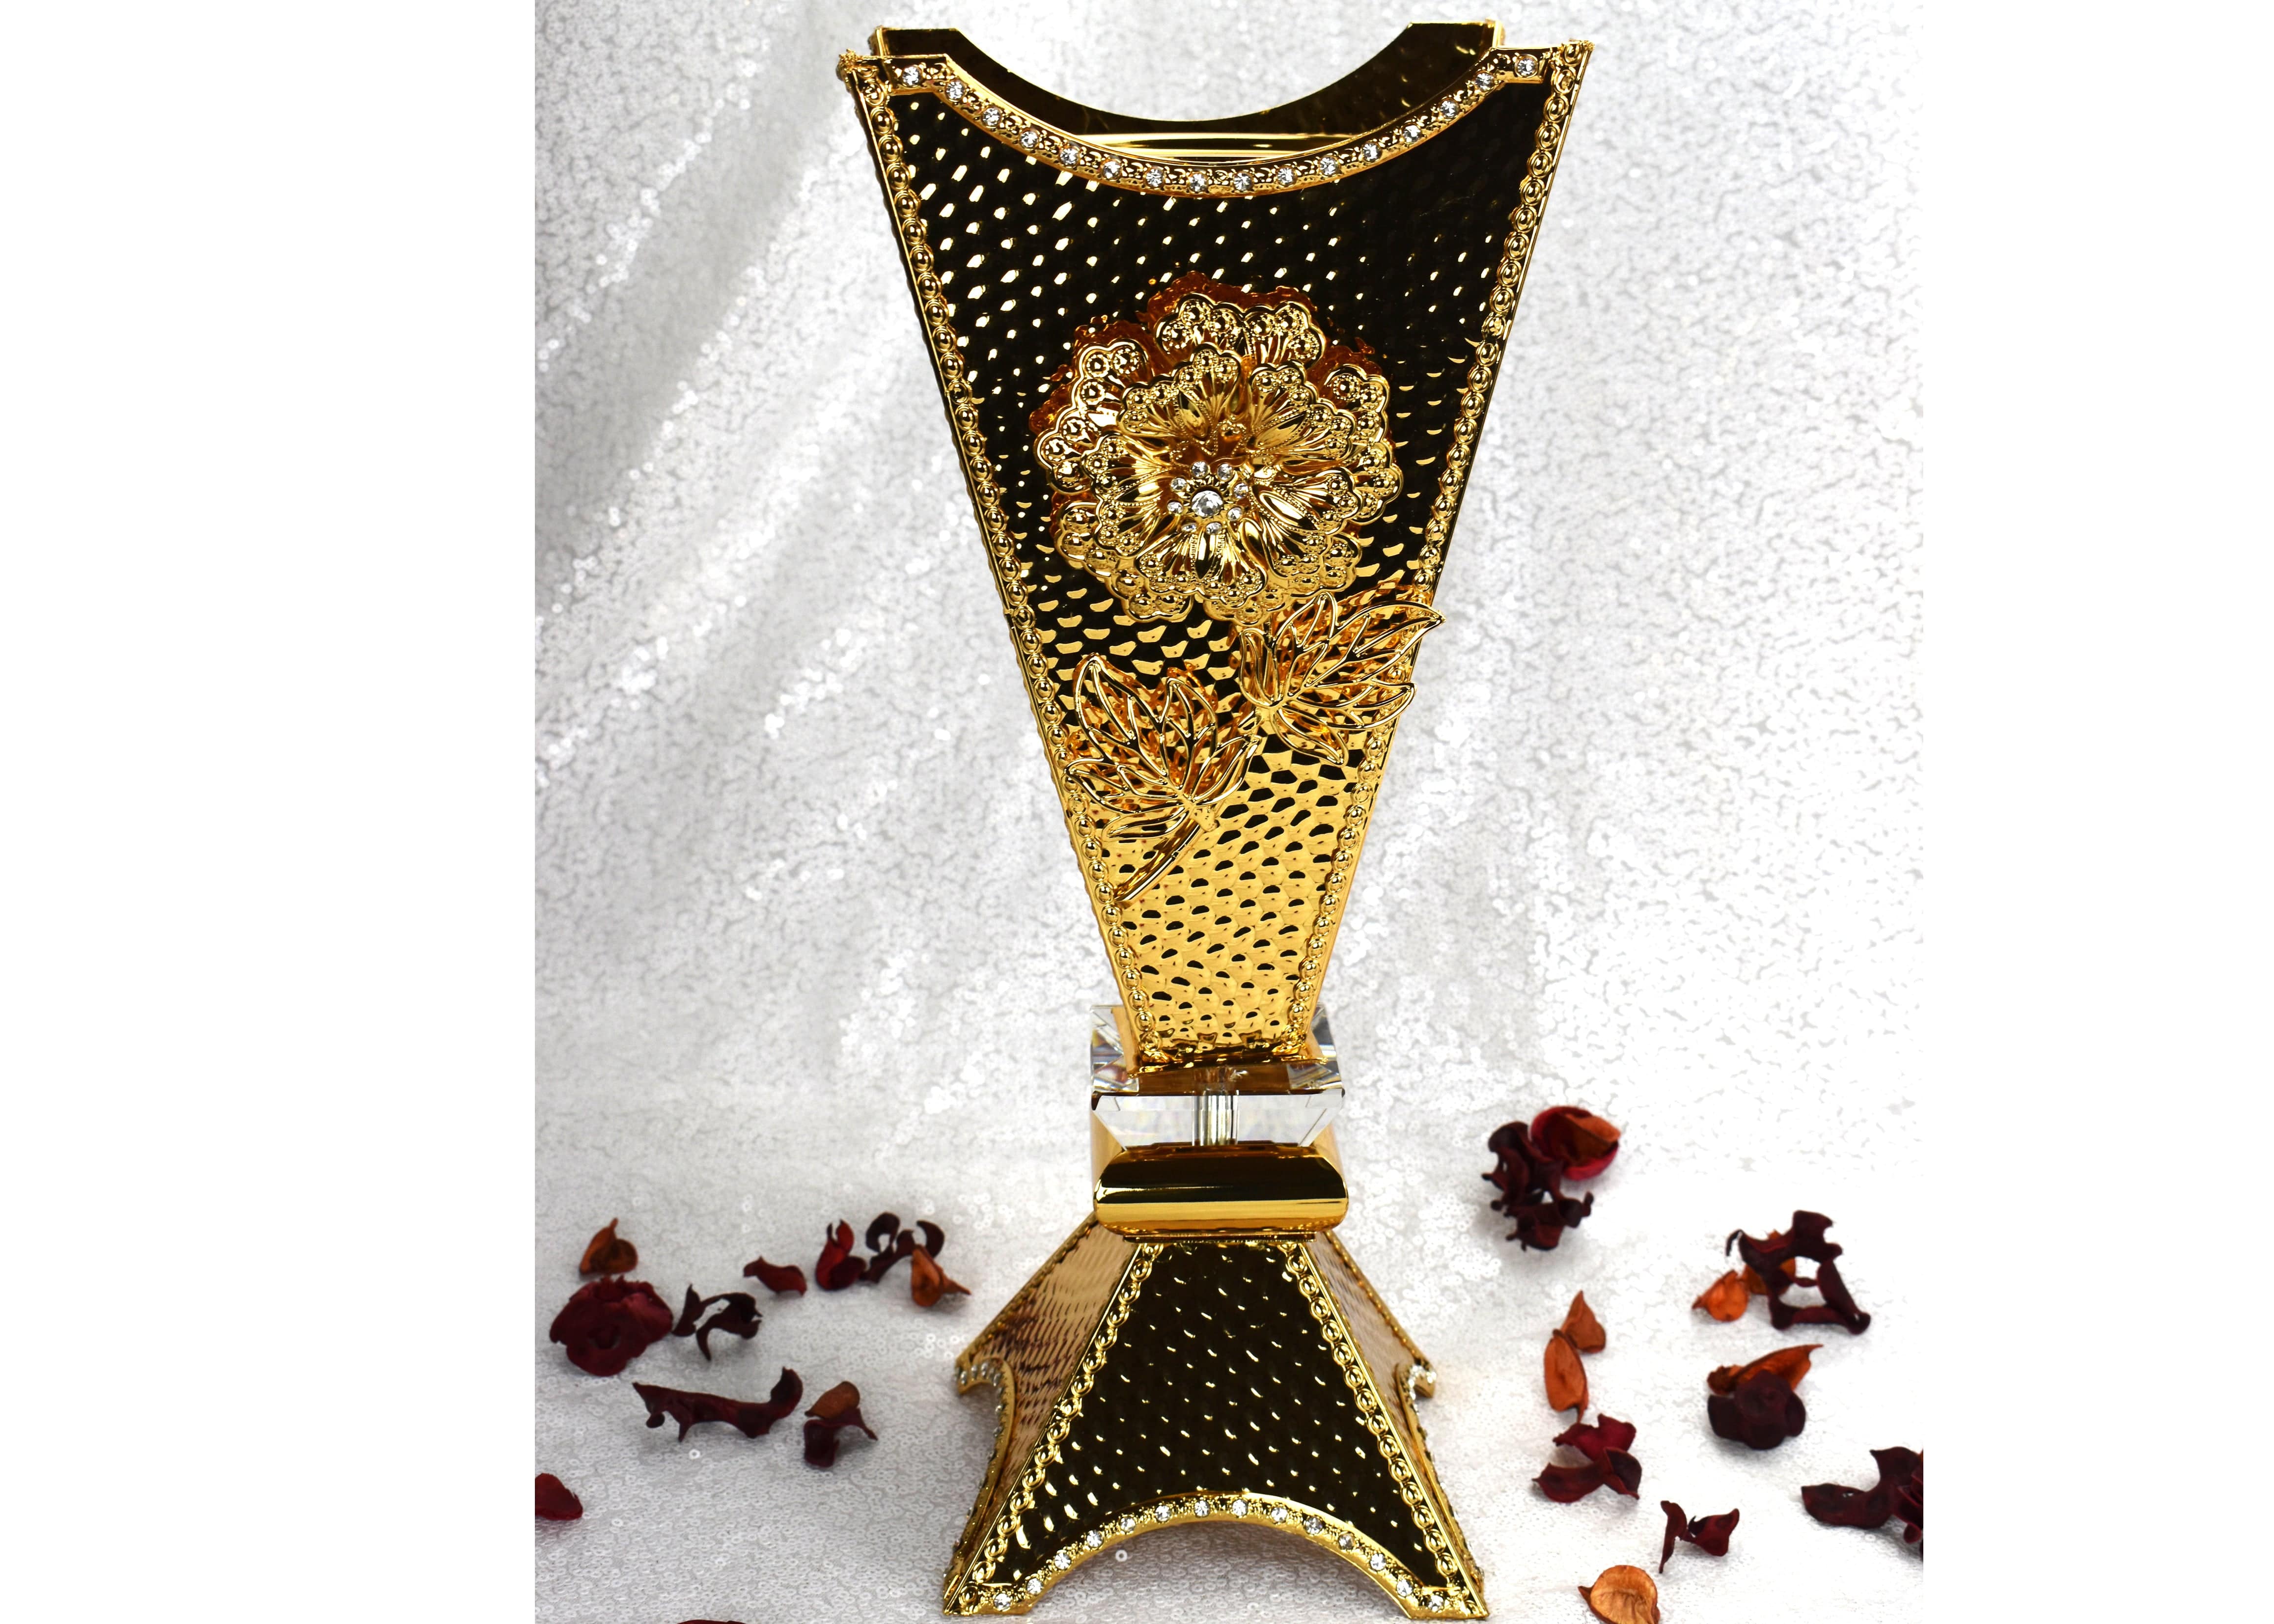 15 inch Gold Scaled Flower Bakhoor by Intense Oud - Intense oud